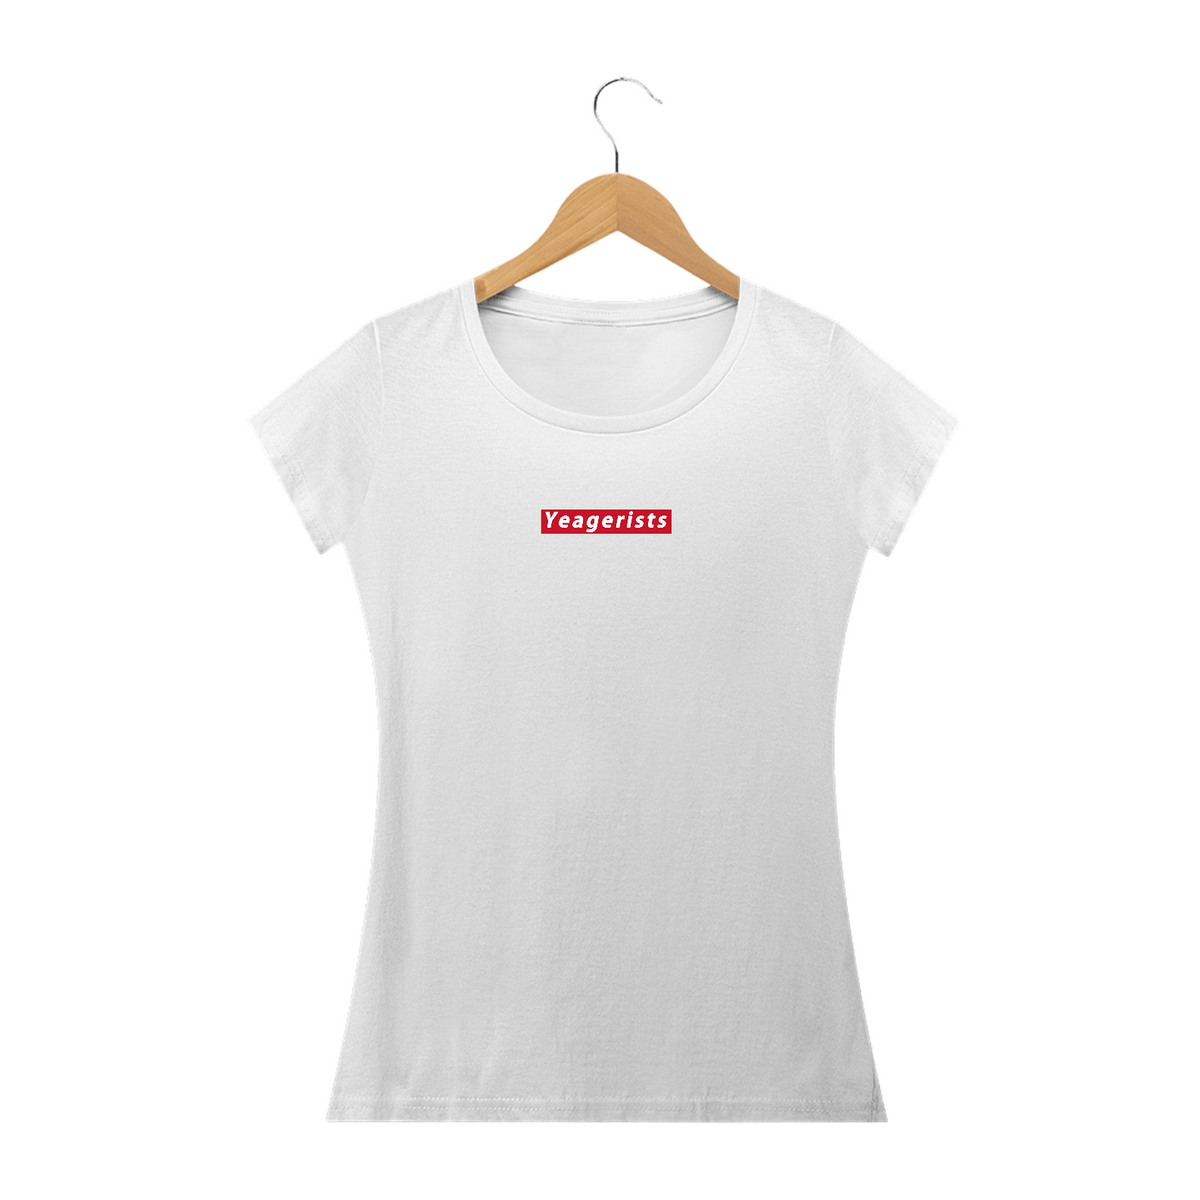 Nome do produto: Camiseta Baby Long - Yeagerists Eren Jaeger Group